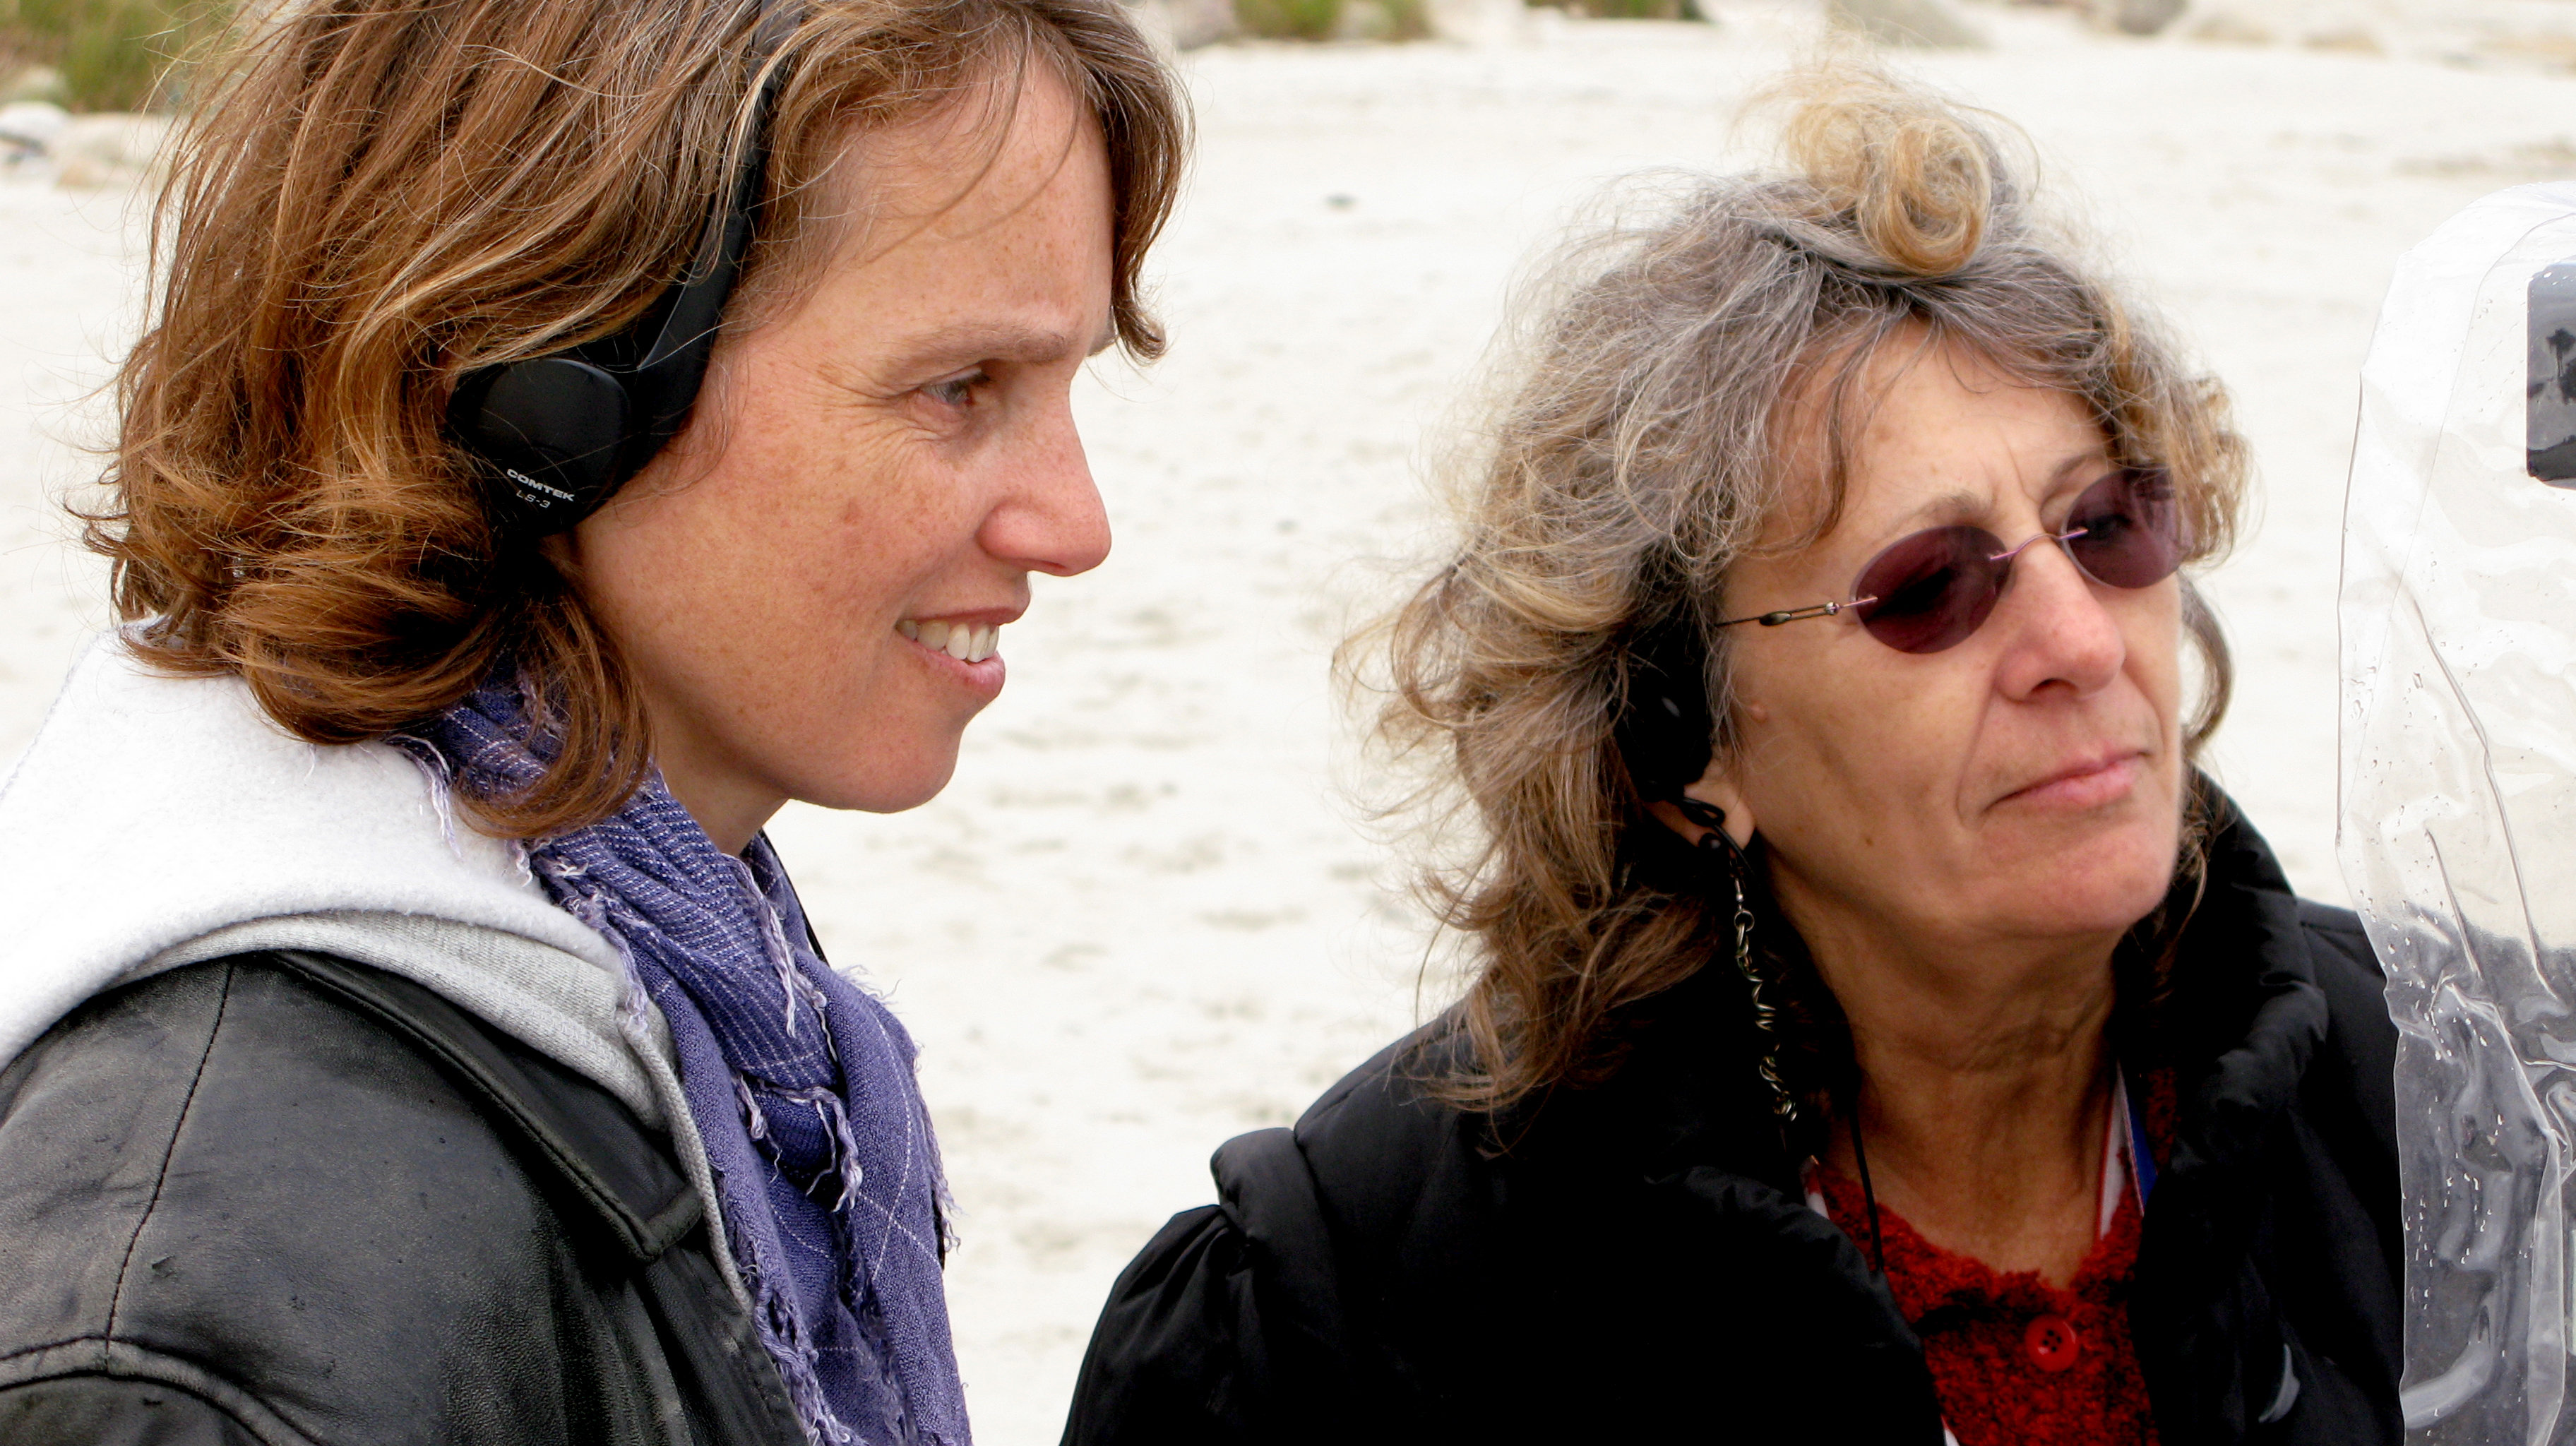 Director Ann Verrall and Script Supervisor Maggie Thomas on the set of Nonsense Revolution